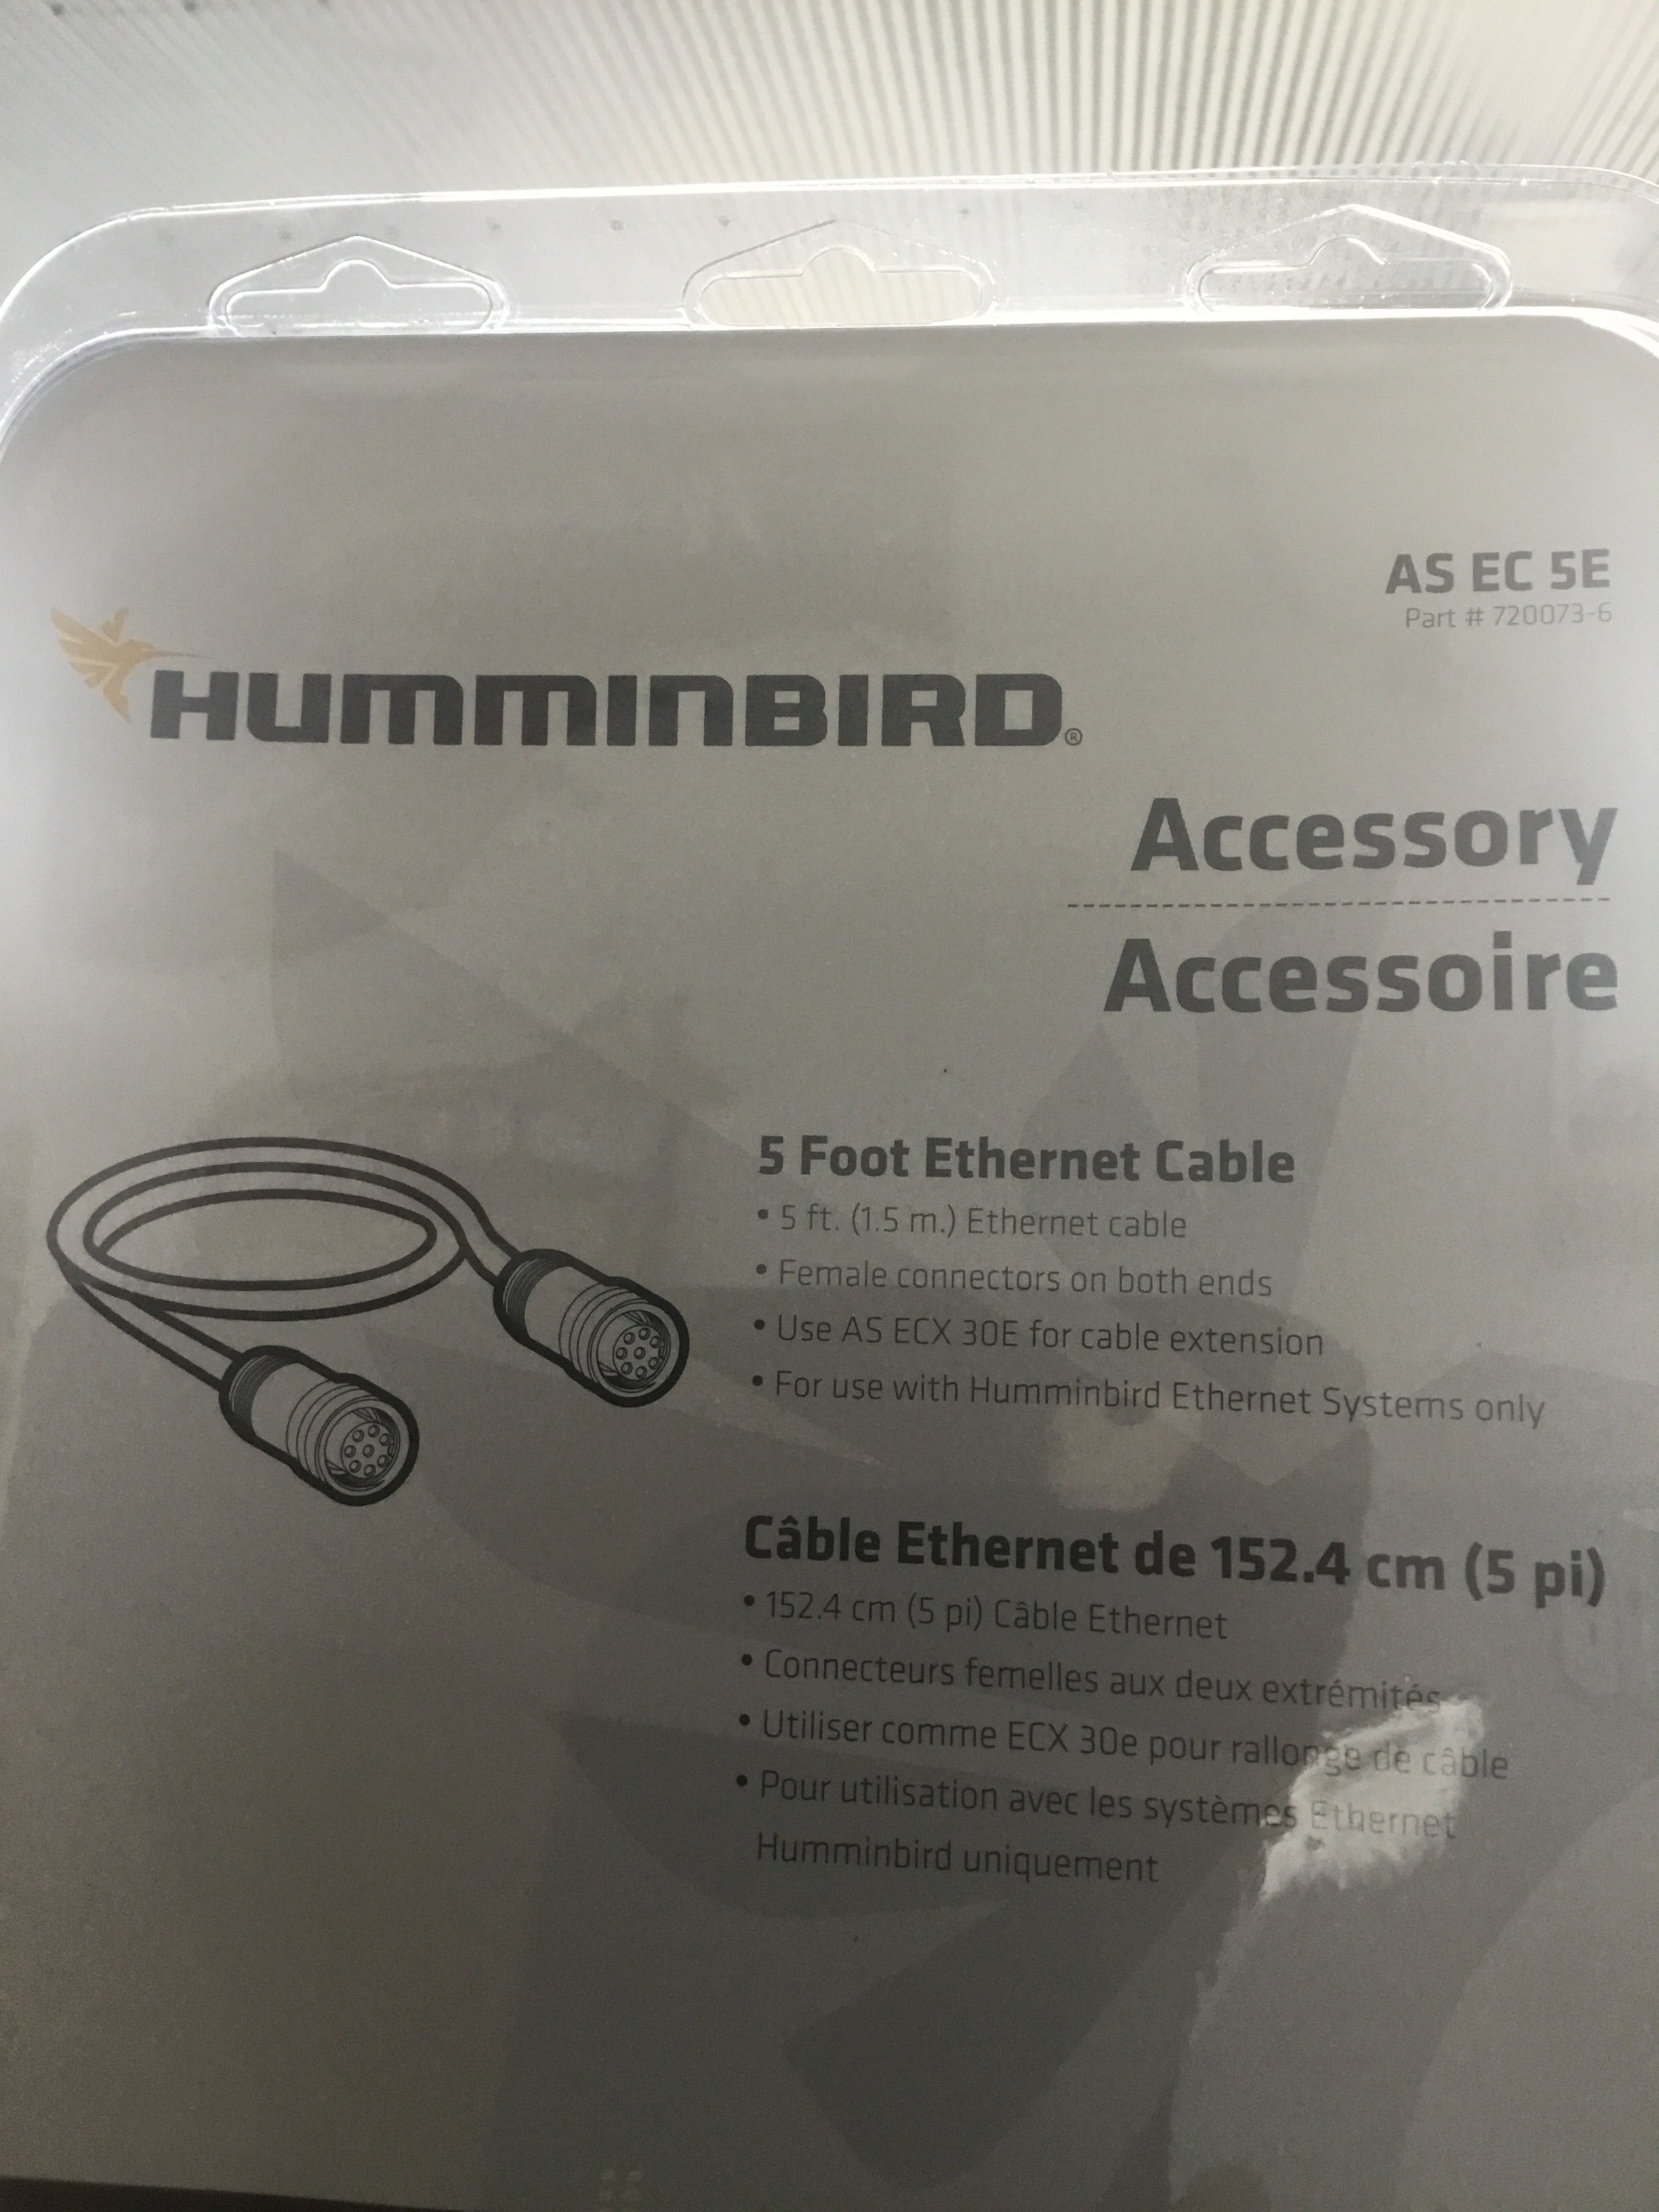 AS EC 15E - 15' Ethernet Cable - Humminbird